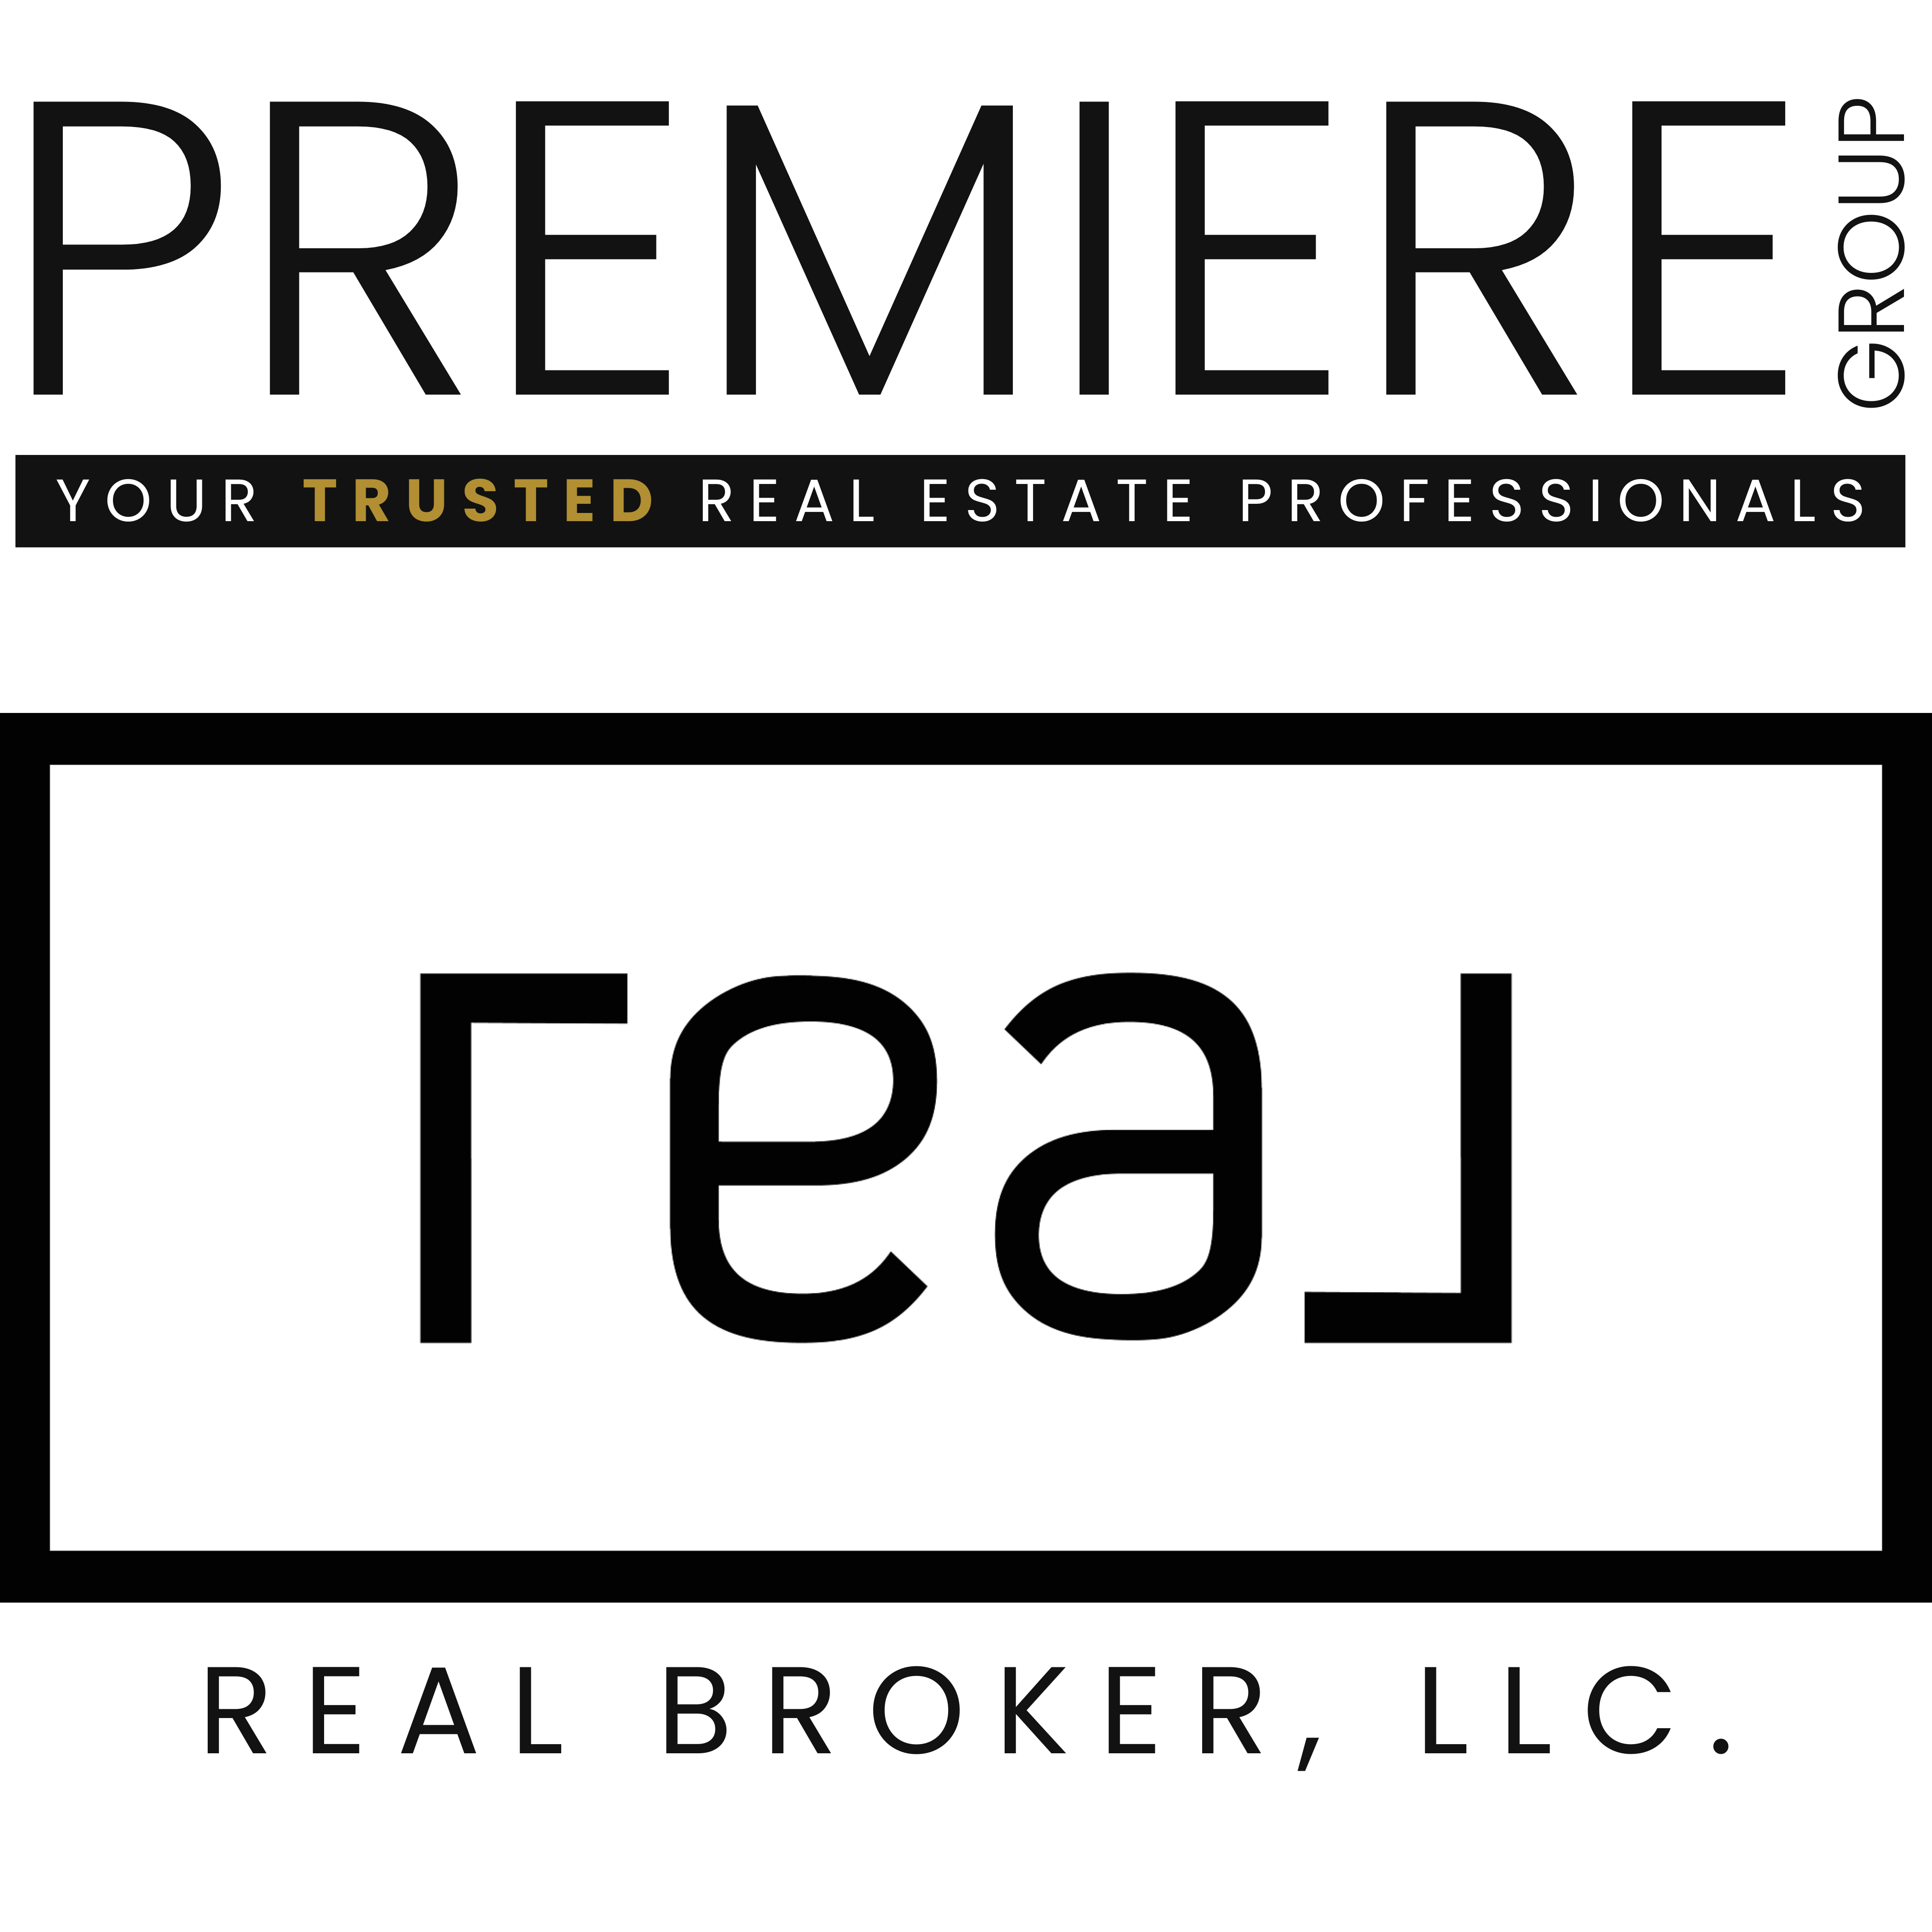 PREMIERE Group at Real Broker LLC